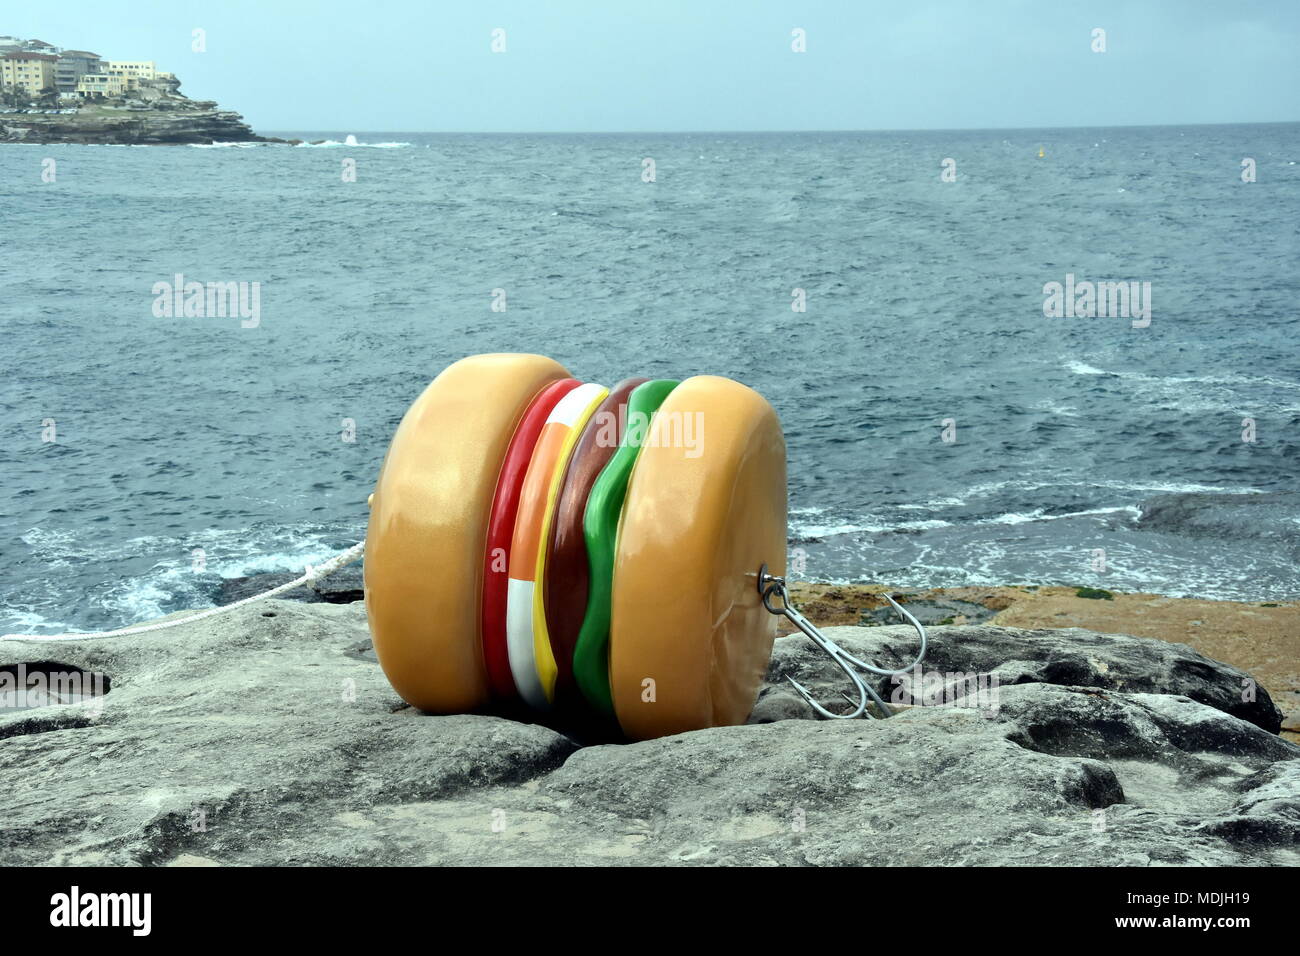 Sydney, Australia - 27 Oct, 2017. James Dive: ¿Qué busca una sabrosa hamburguesa. Escultura realizada por el mar a lo largo de la Bondi de Coogee caminata costera del mundo. Foto de stock